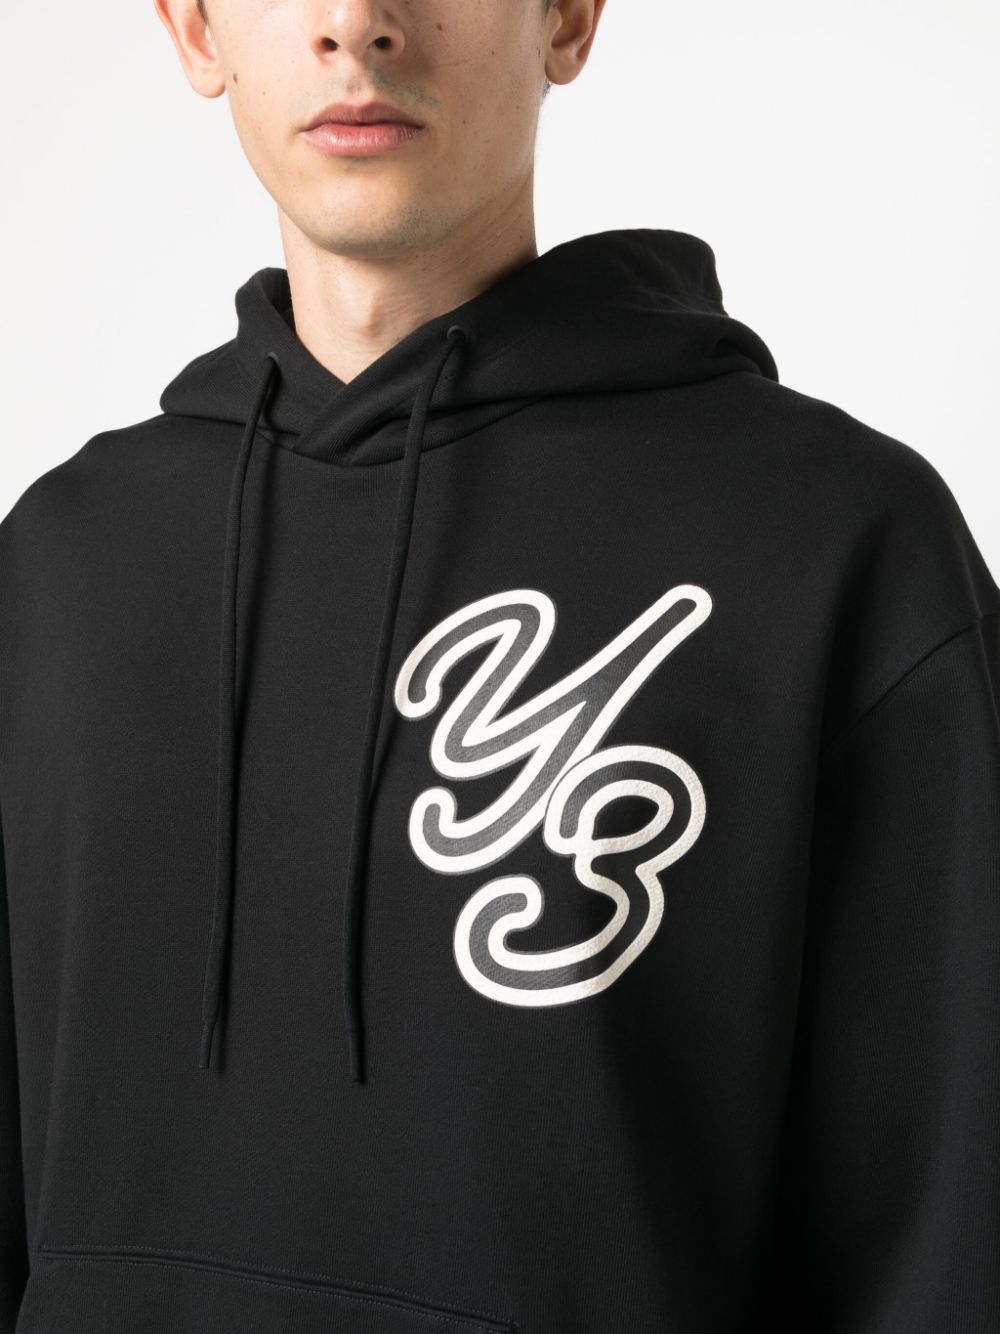 black hoodie with logo